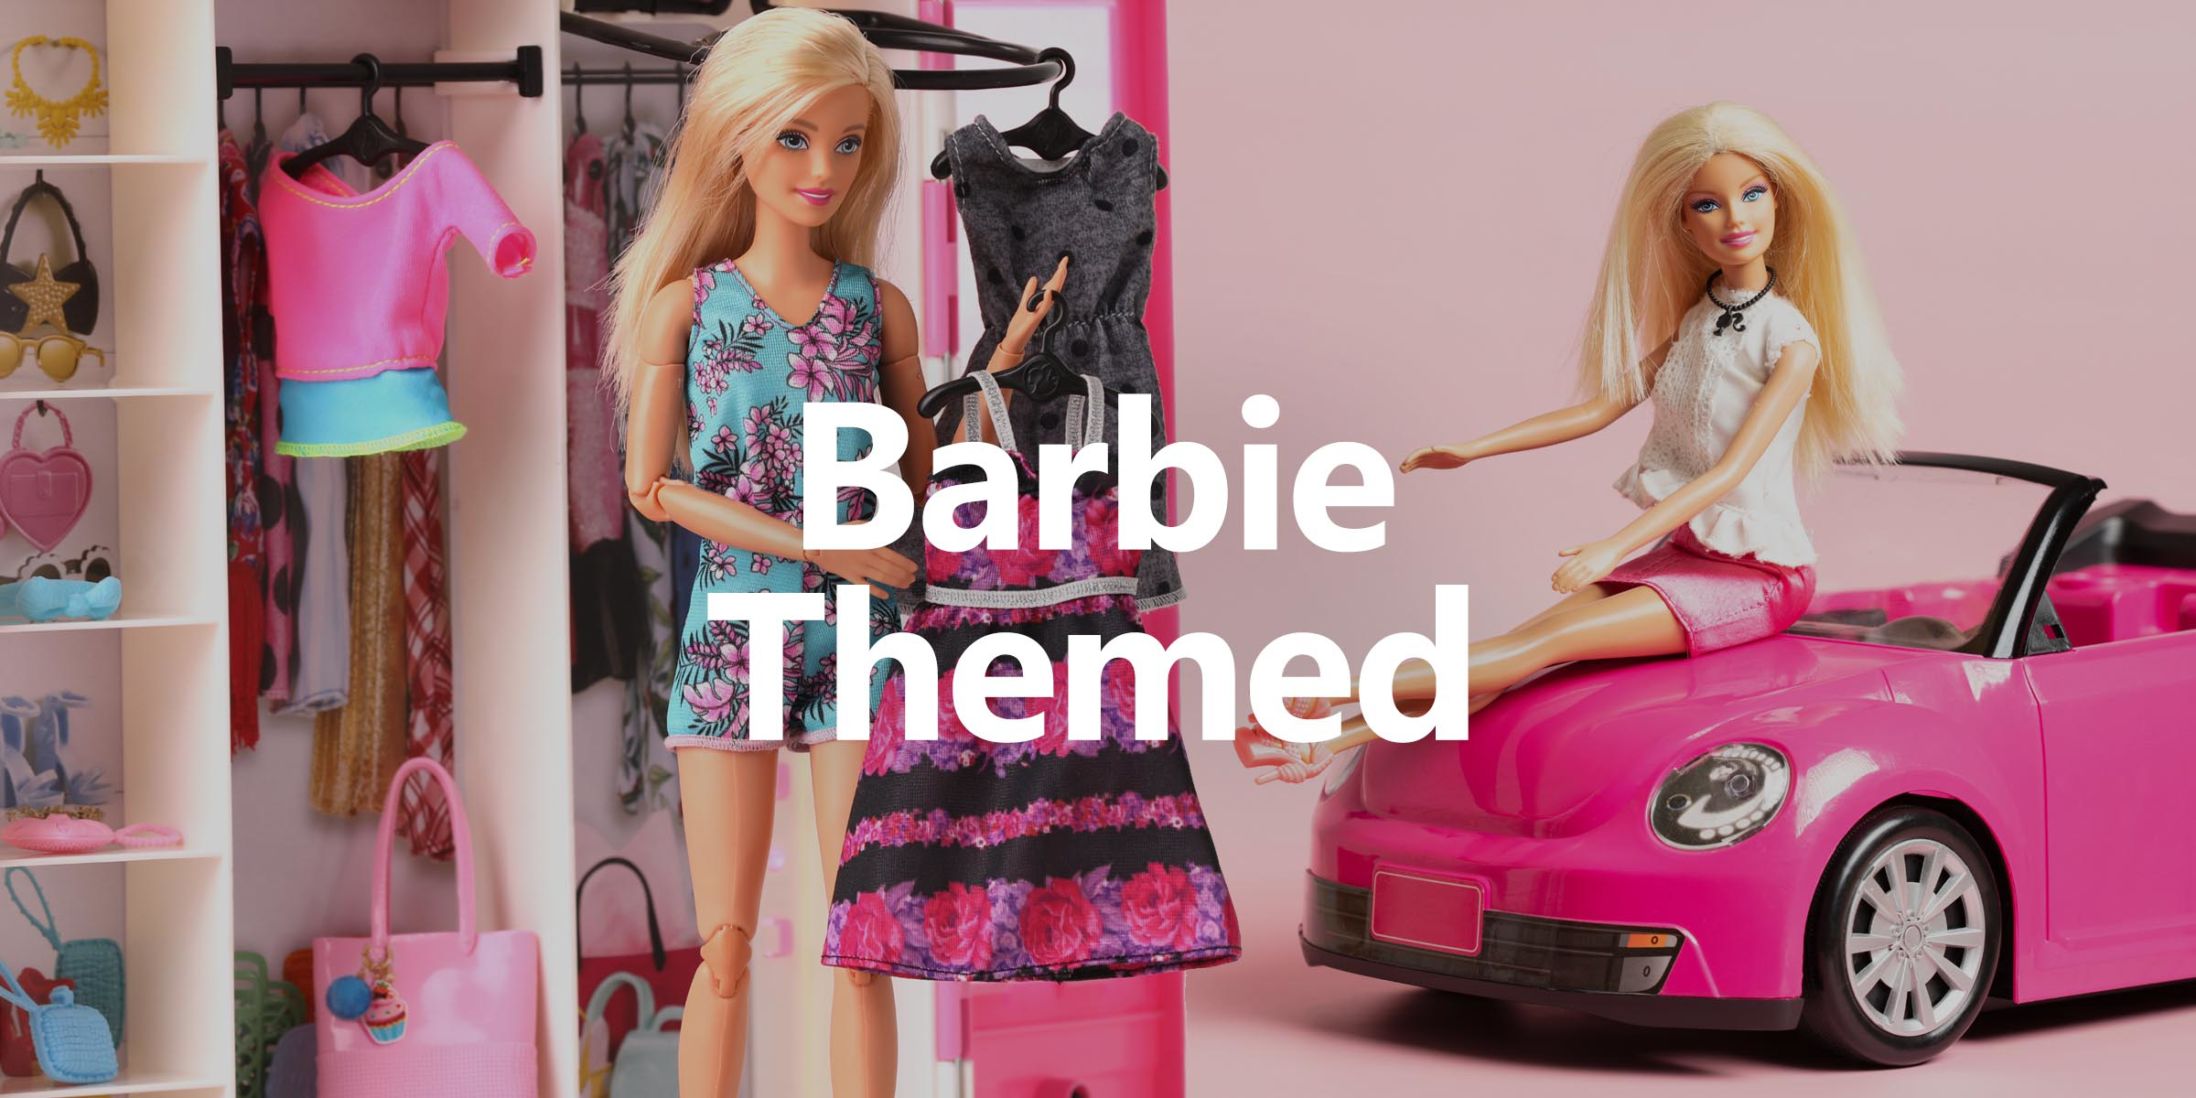 Barbie Themed Hen Party Ideas